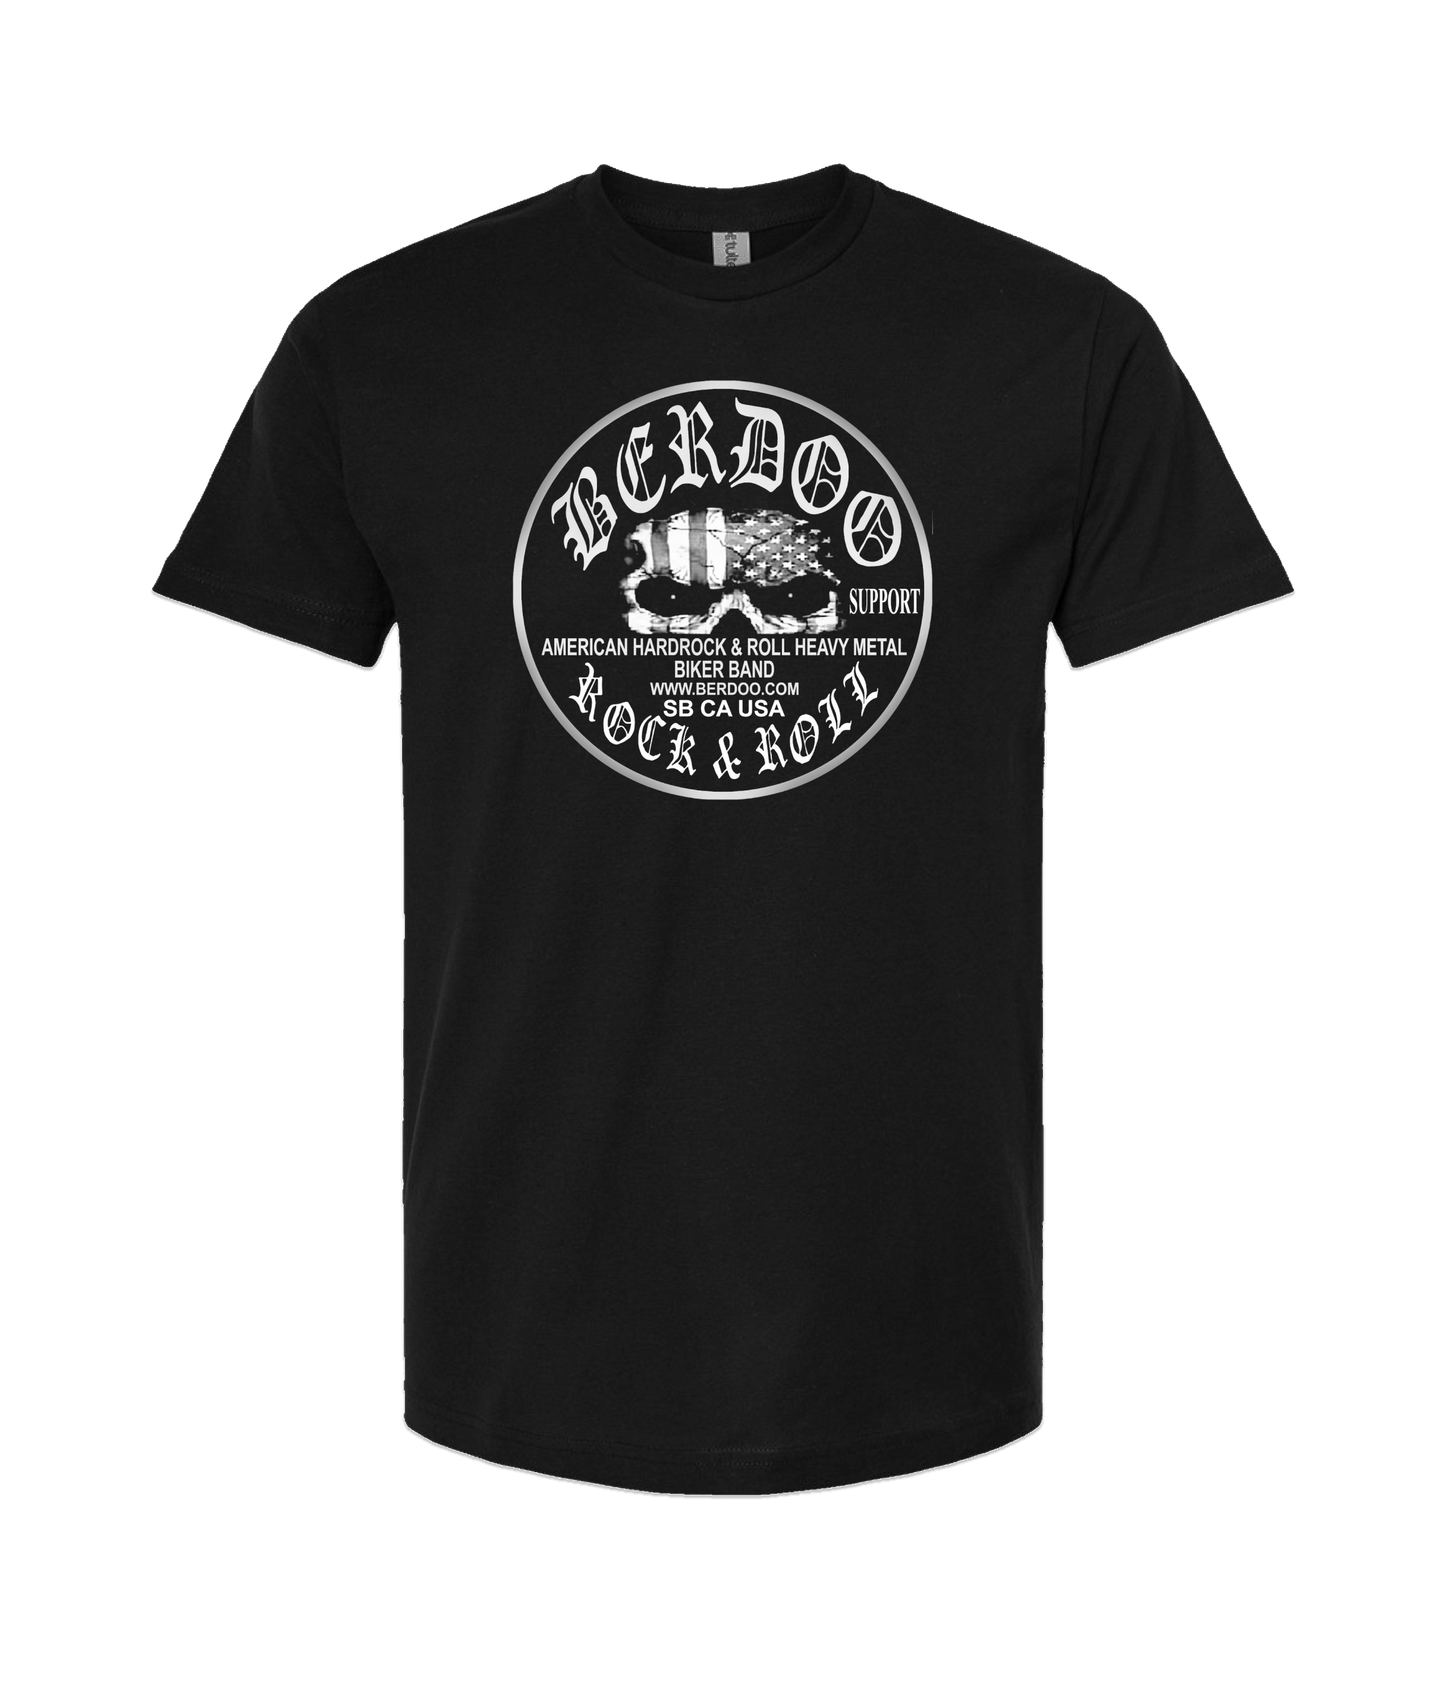 BERDOO BAND SUPPORT GEAR - Logo (B&W) - Black T Shirt